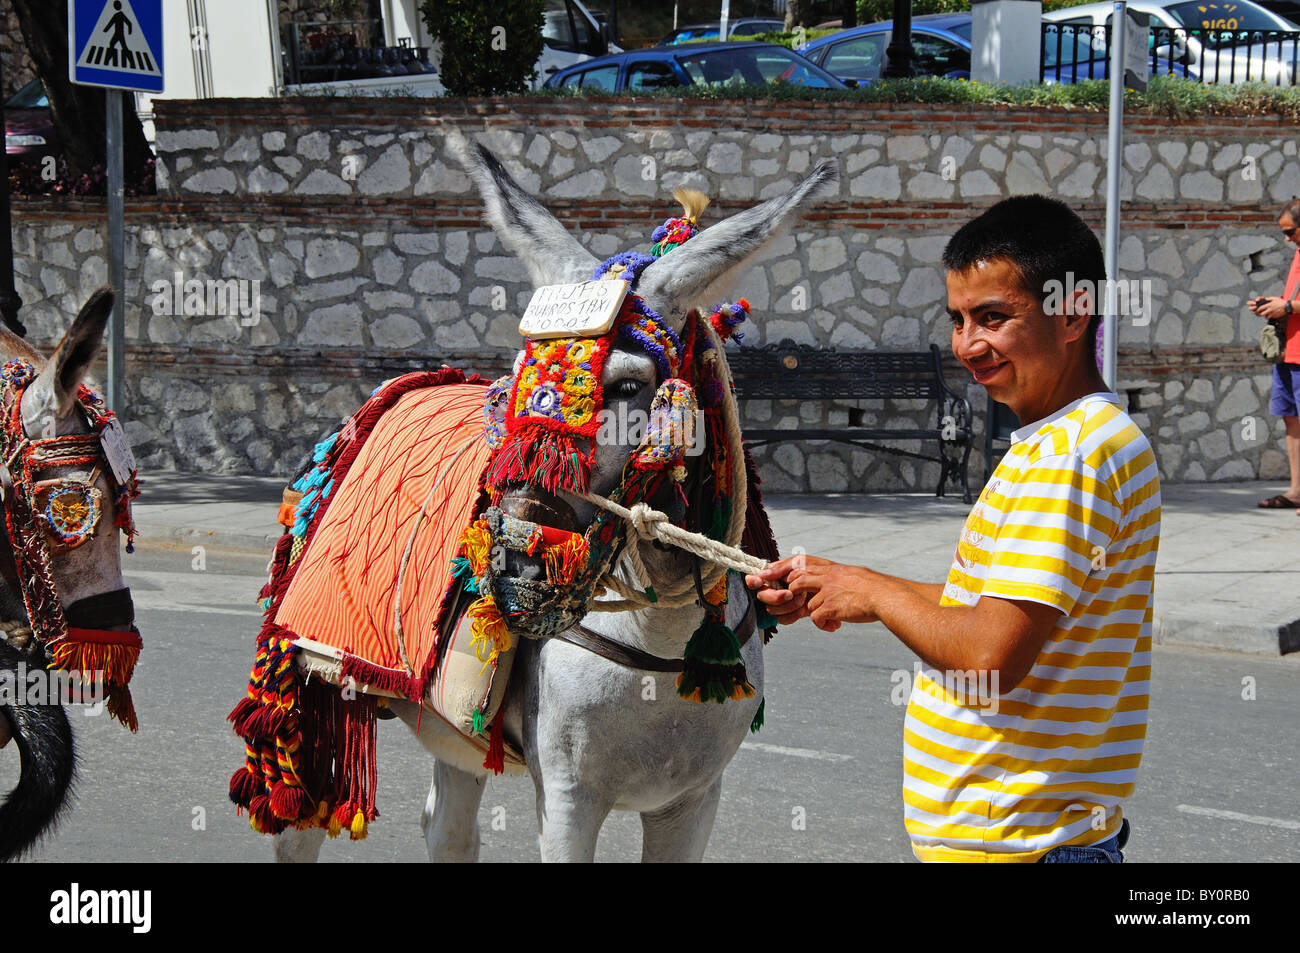 Donkey (burro taxi), Mijas, Costa del Sol, Malaga Province, Andalucia, Spain, Western Europe. Stock Photo